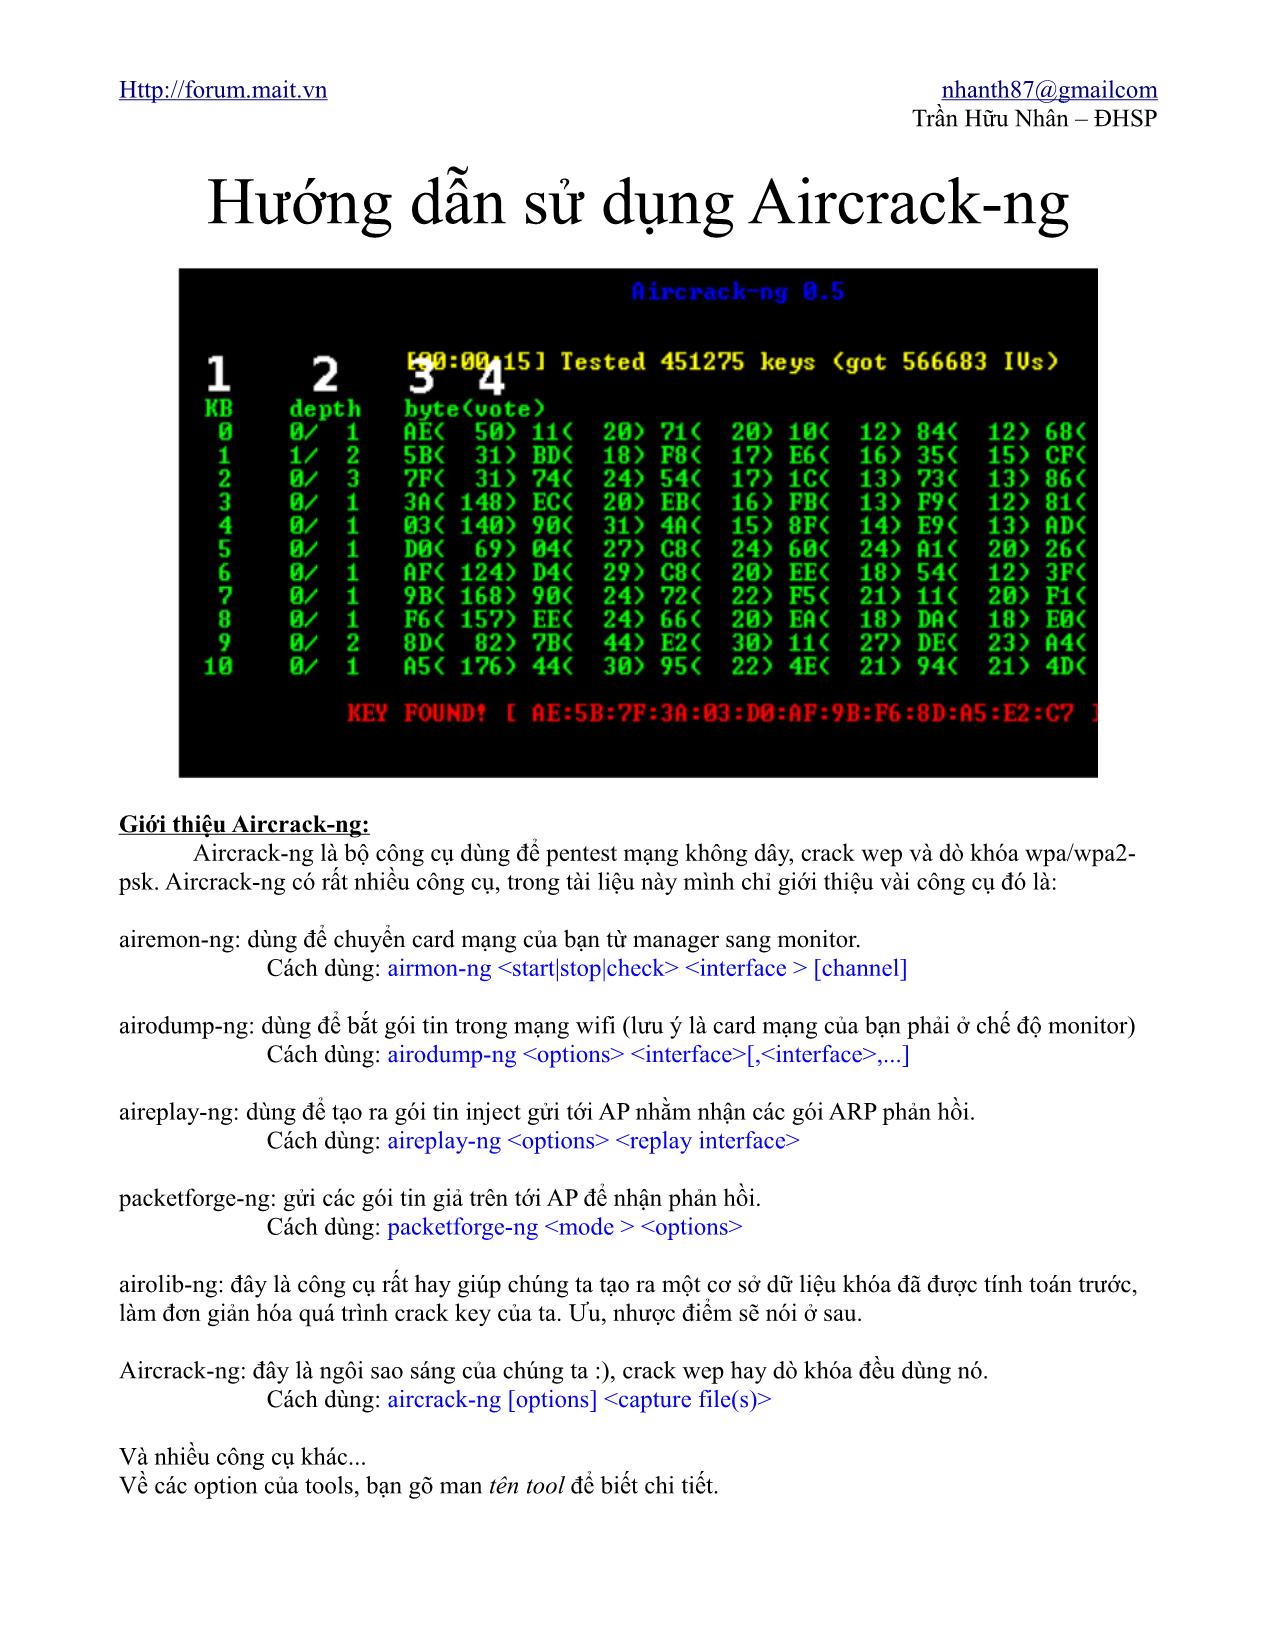 Hướng dẫn sử dụng Aircrack-Ng trang 1